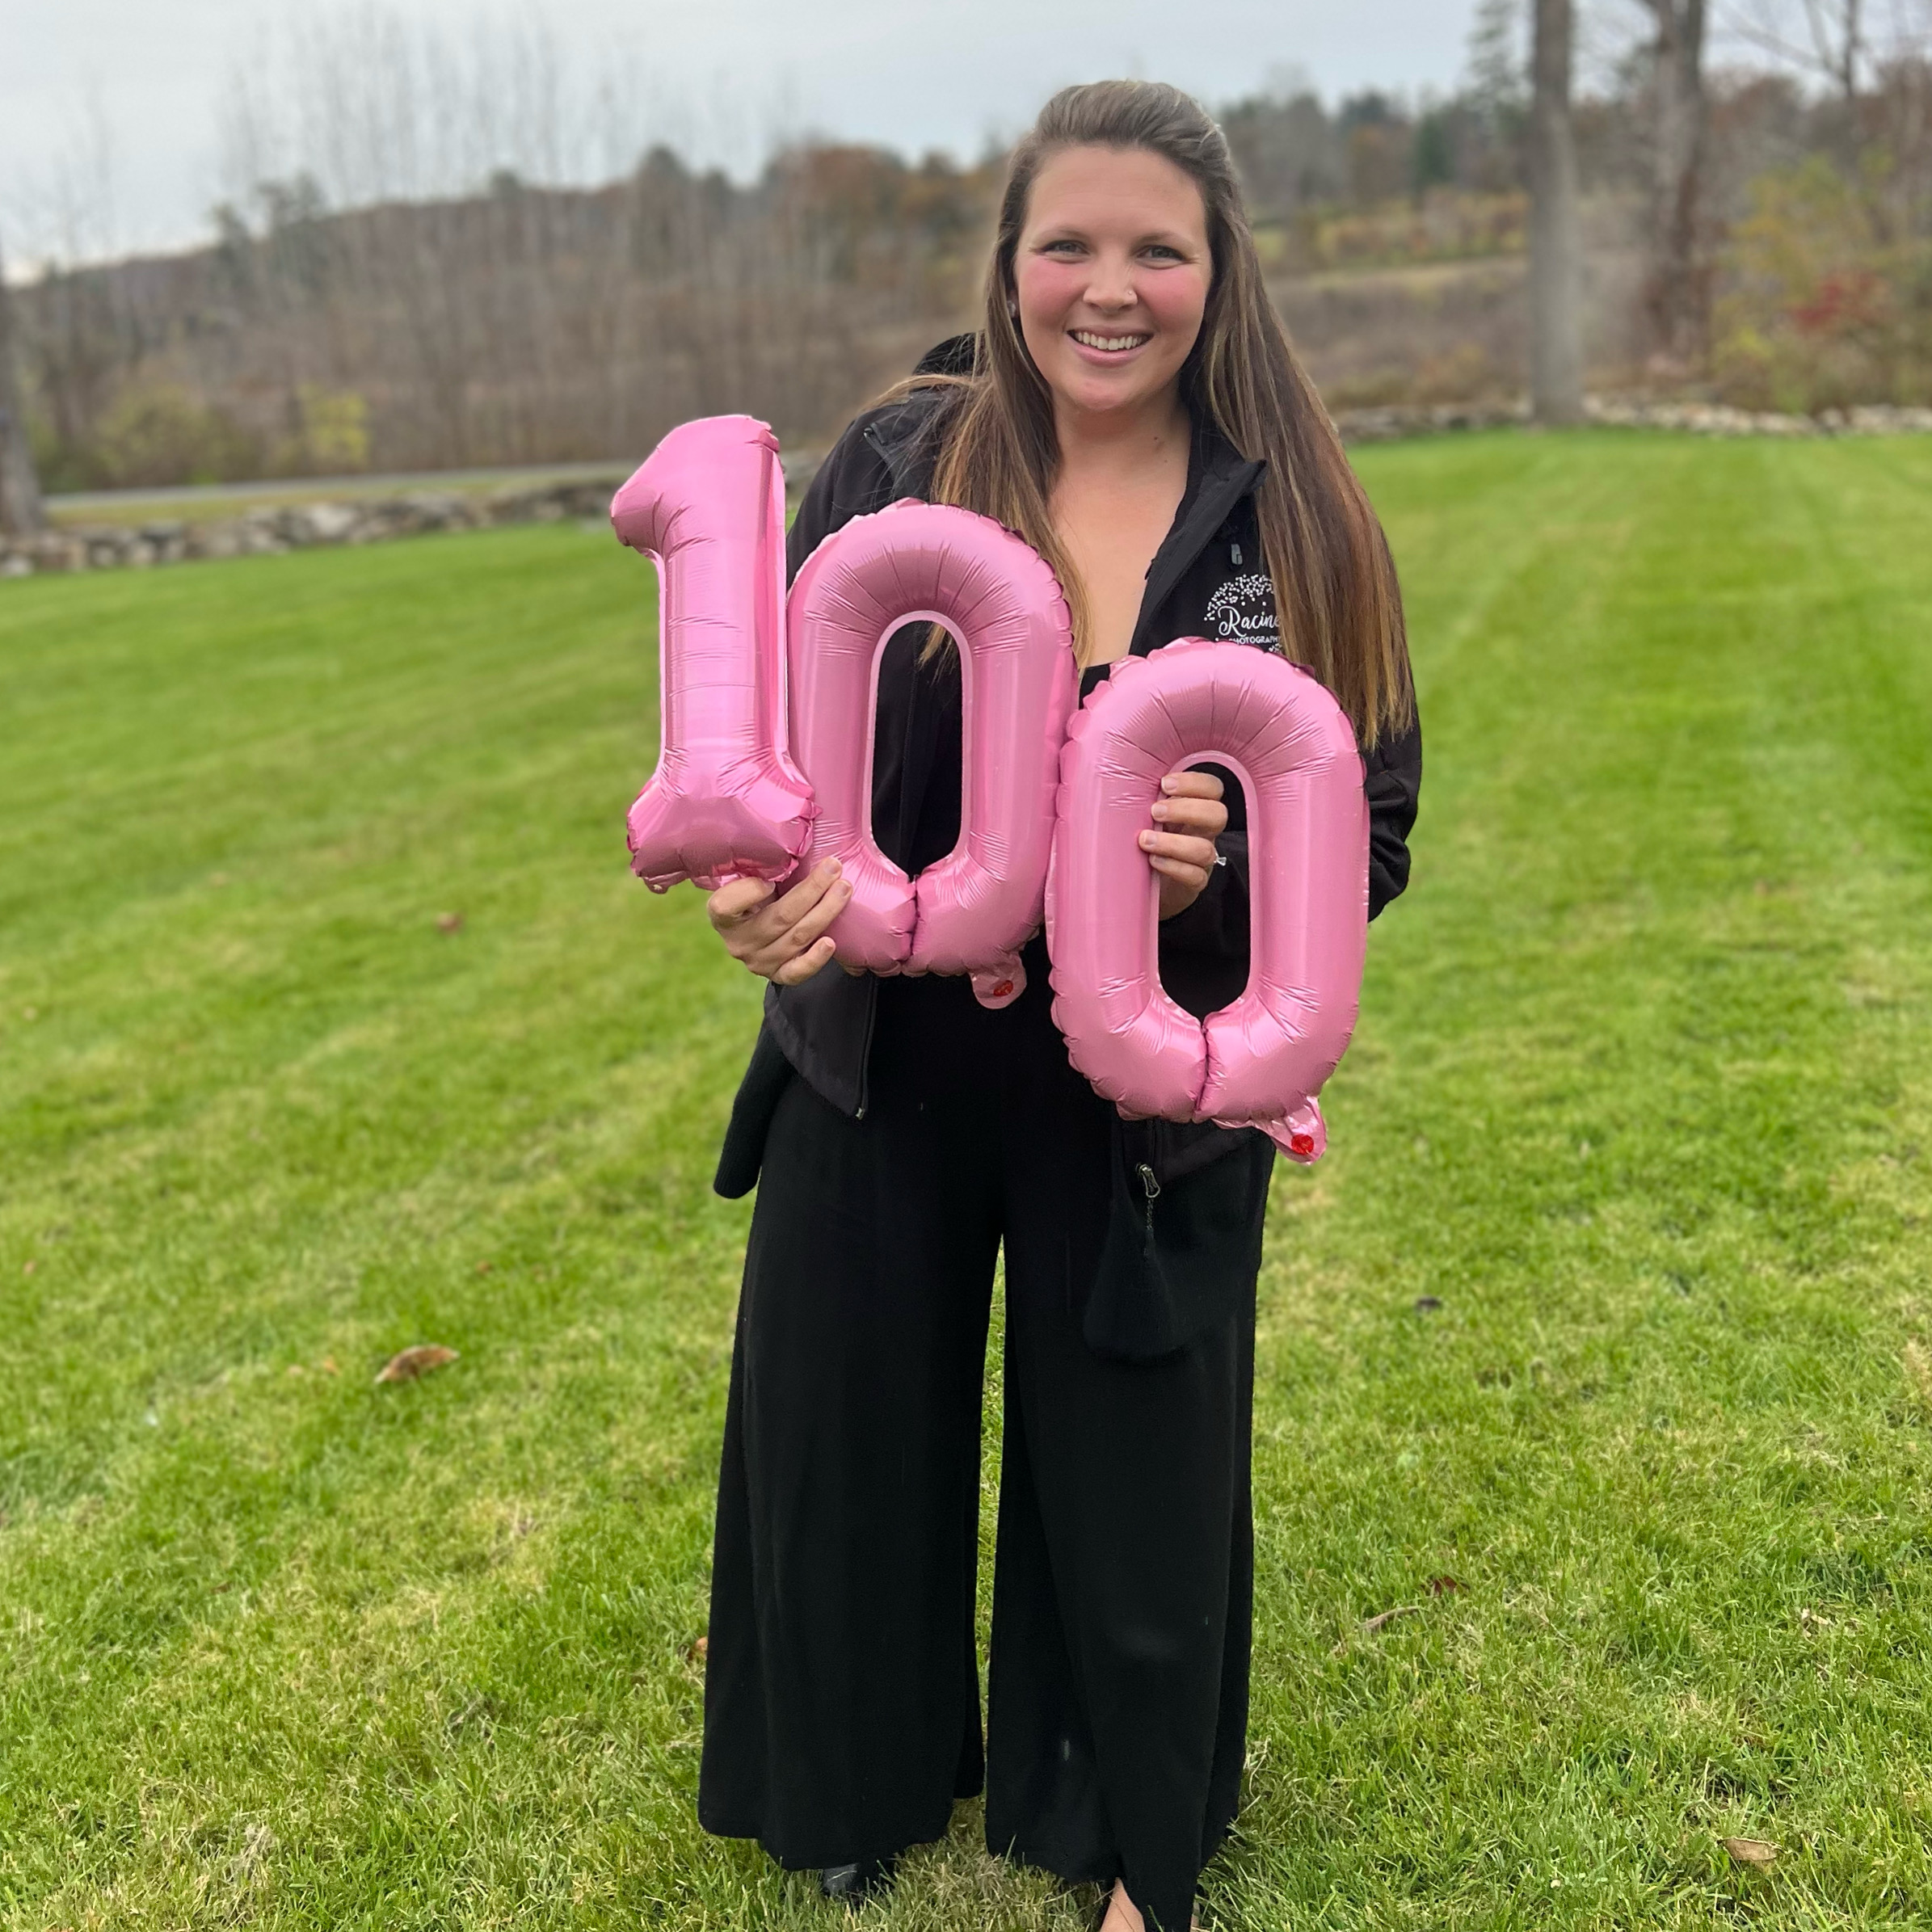 NH wedding photographer with 100 balloons to celebrate shooting 100 weddings